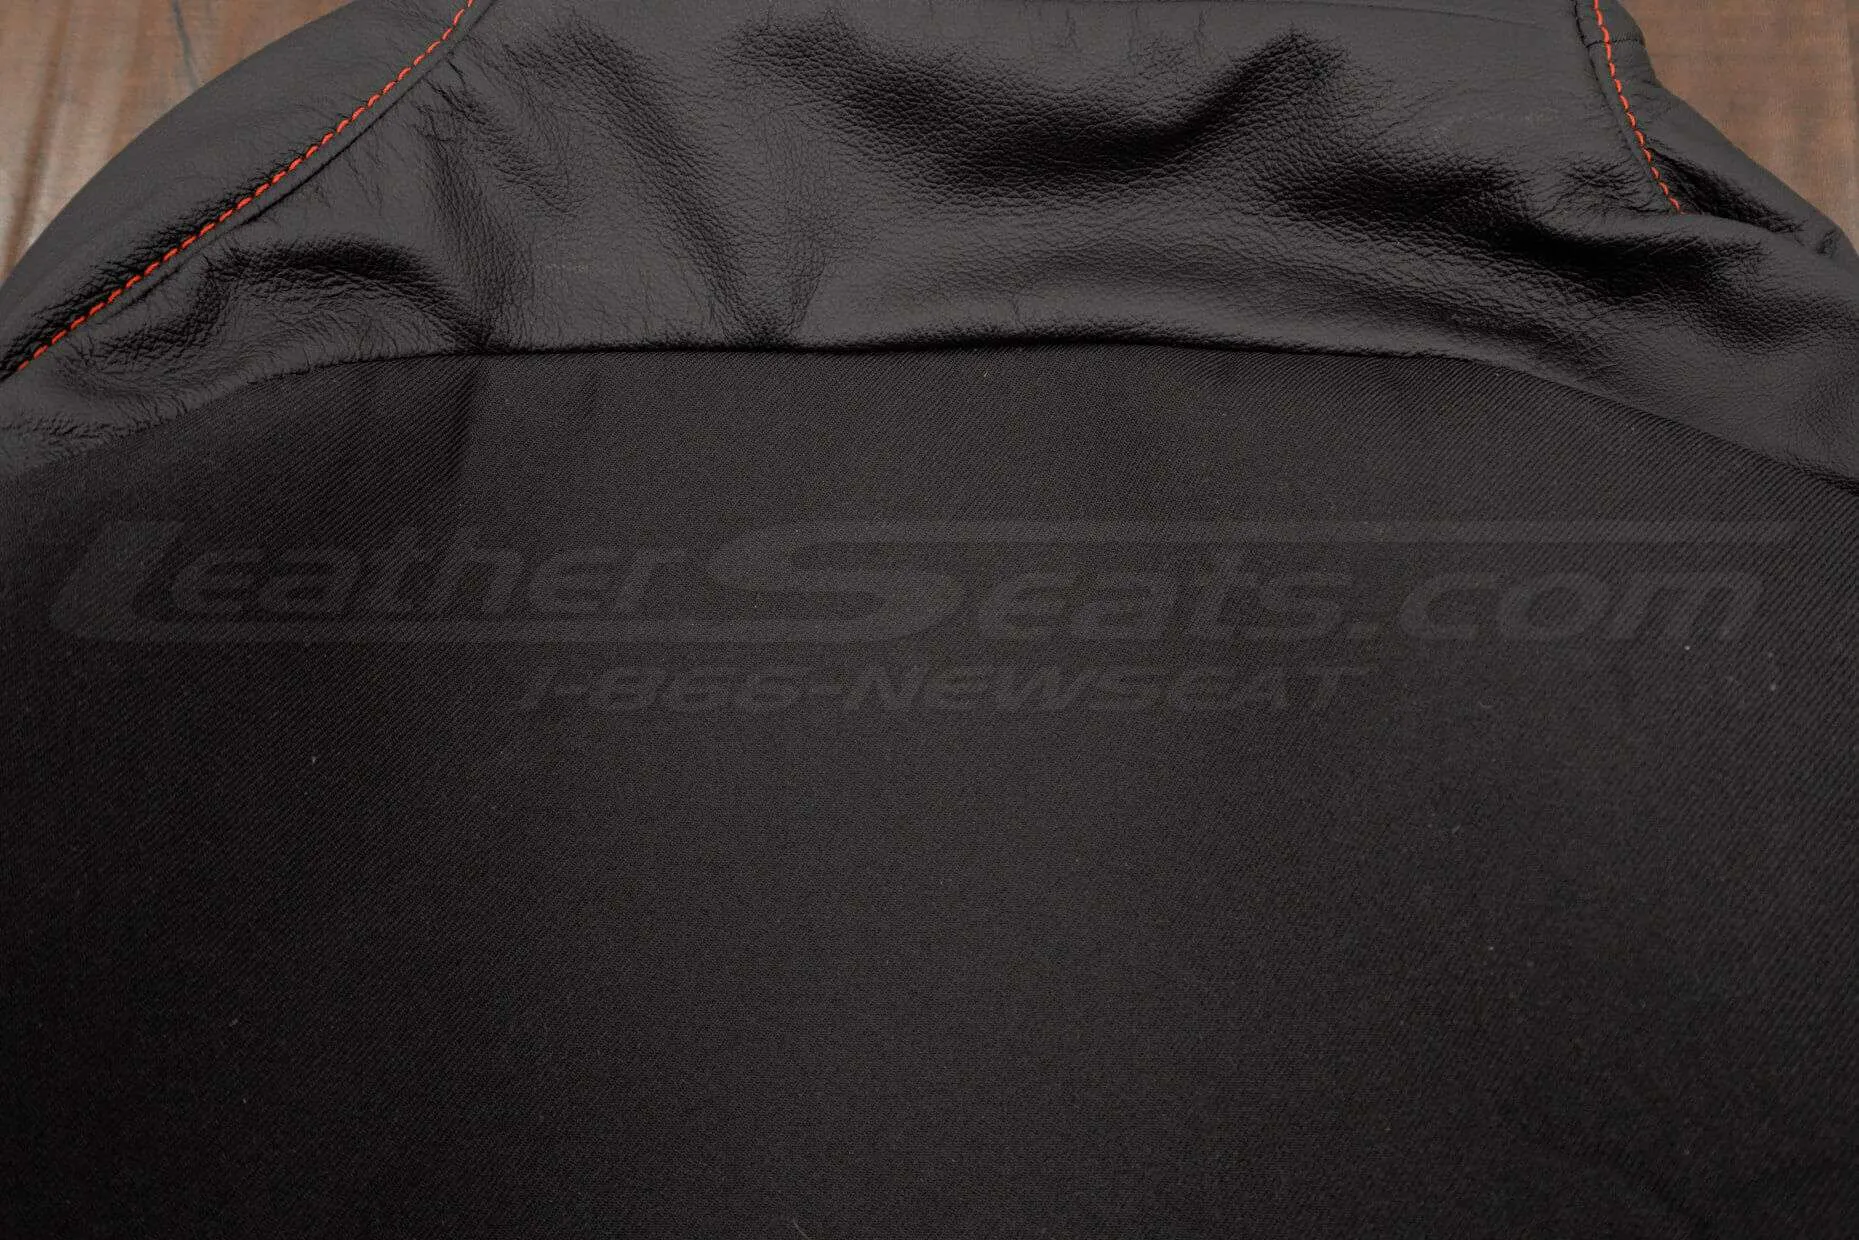 05-13 Chevrolet Corvette Upholstery Kit - Black & Bright Red - Insert below headrest close-up